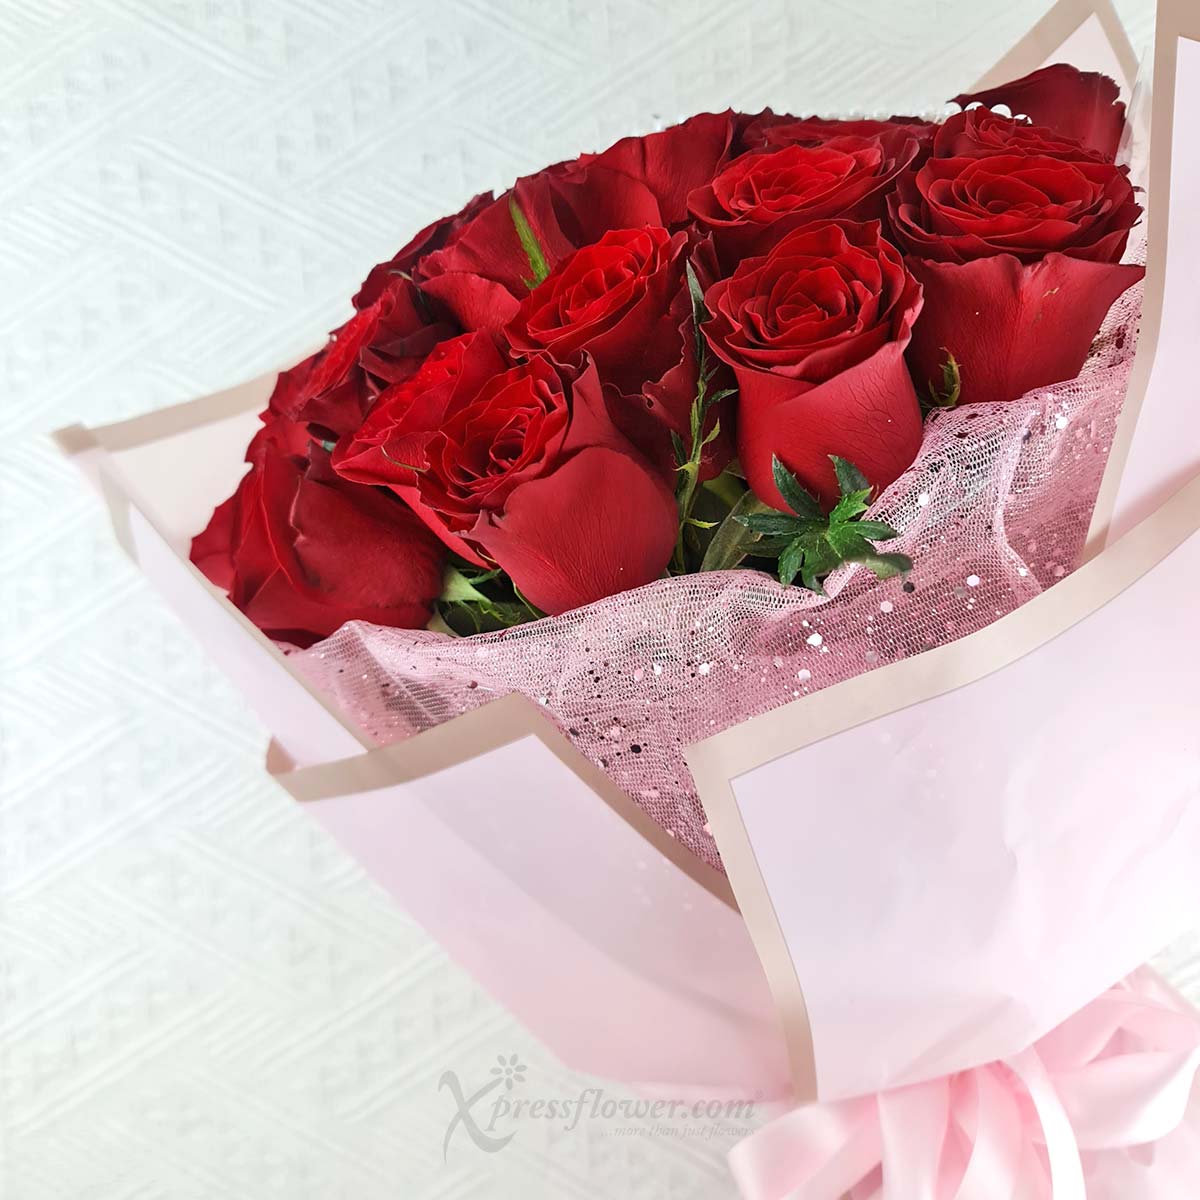 VDBQ2414_Amour Elegance 36 Red Roses_1C